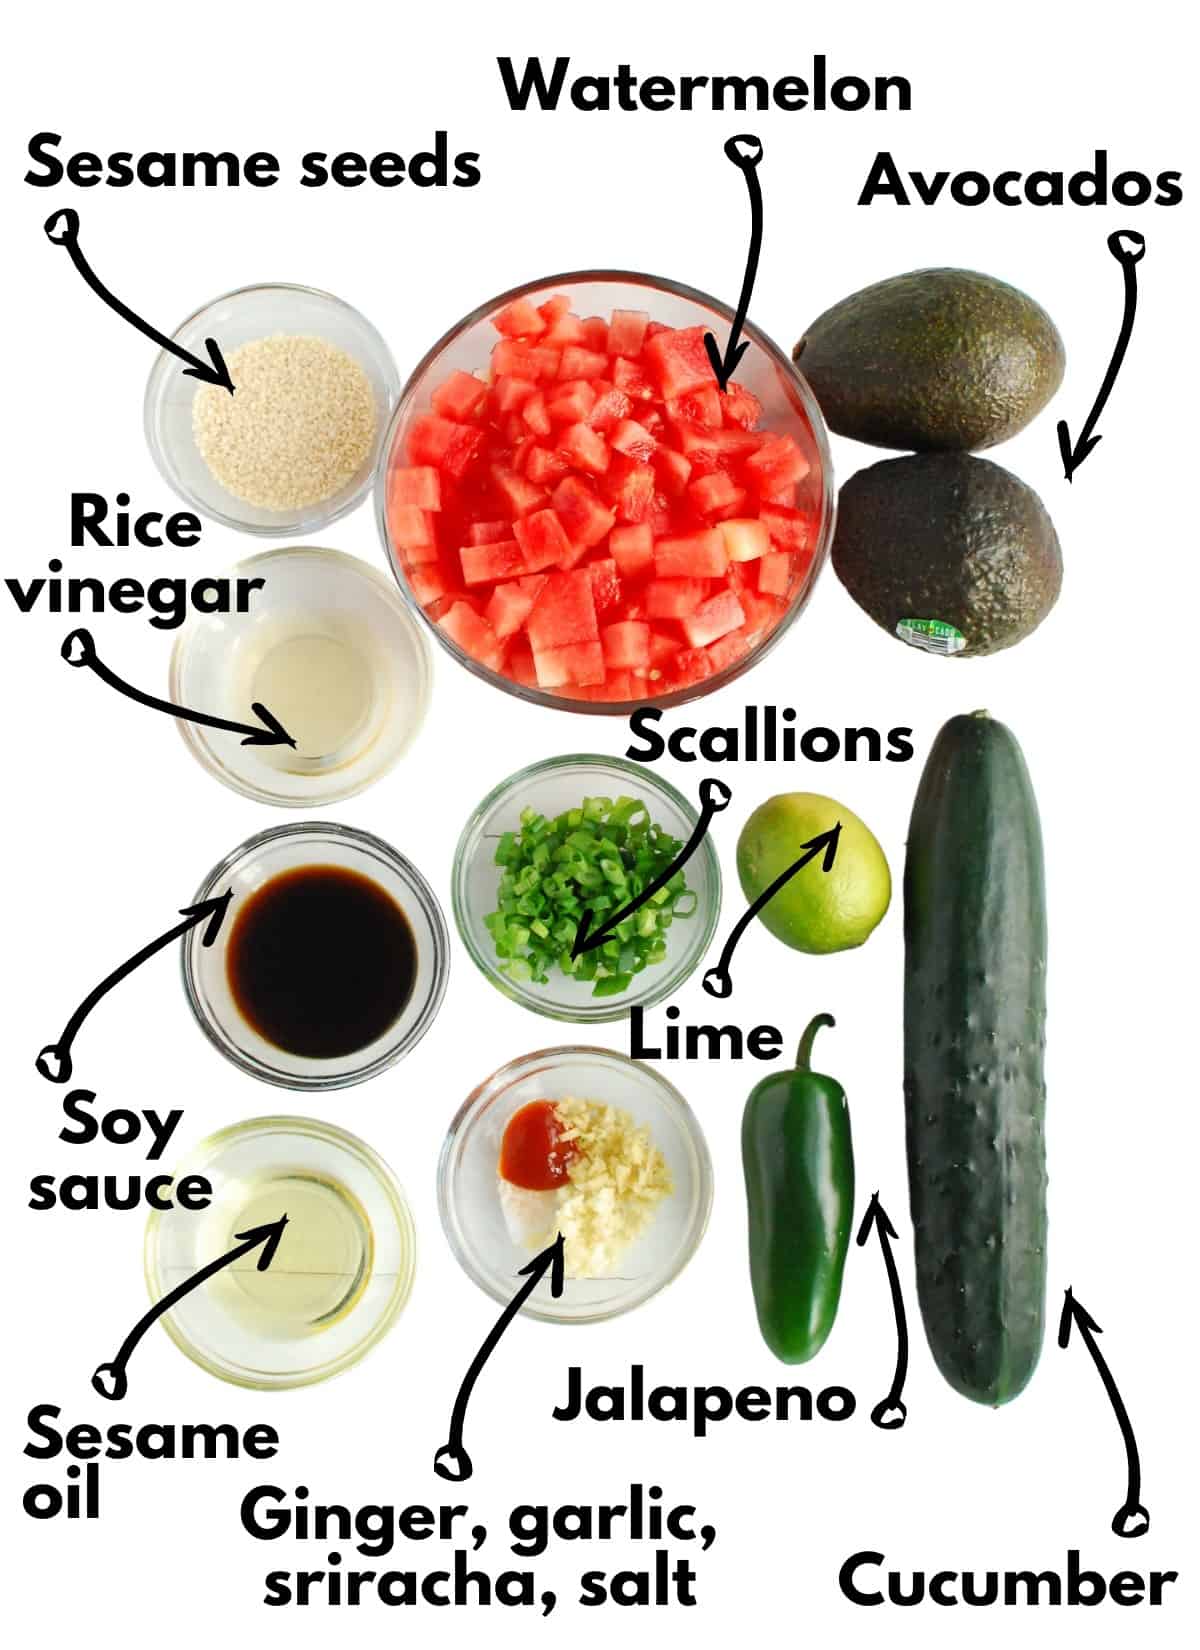 Watermelon, avocado, sesame seeds, cucumber, jalapeno, lime, scallions, seasonings, sesame oil, soy sauce, and rice vinegar.